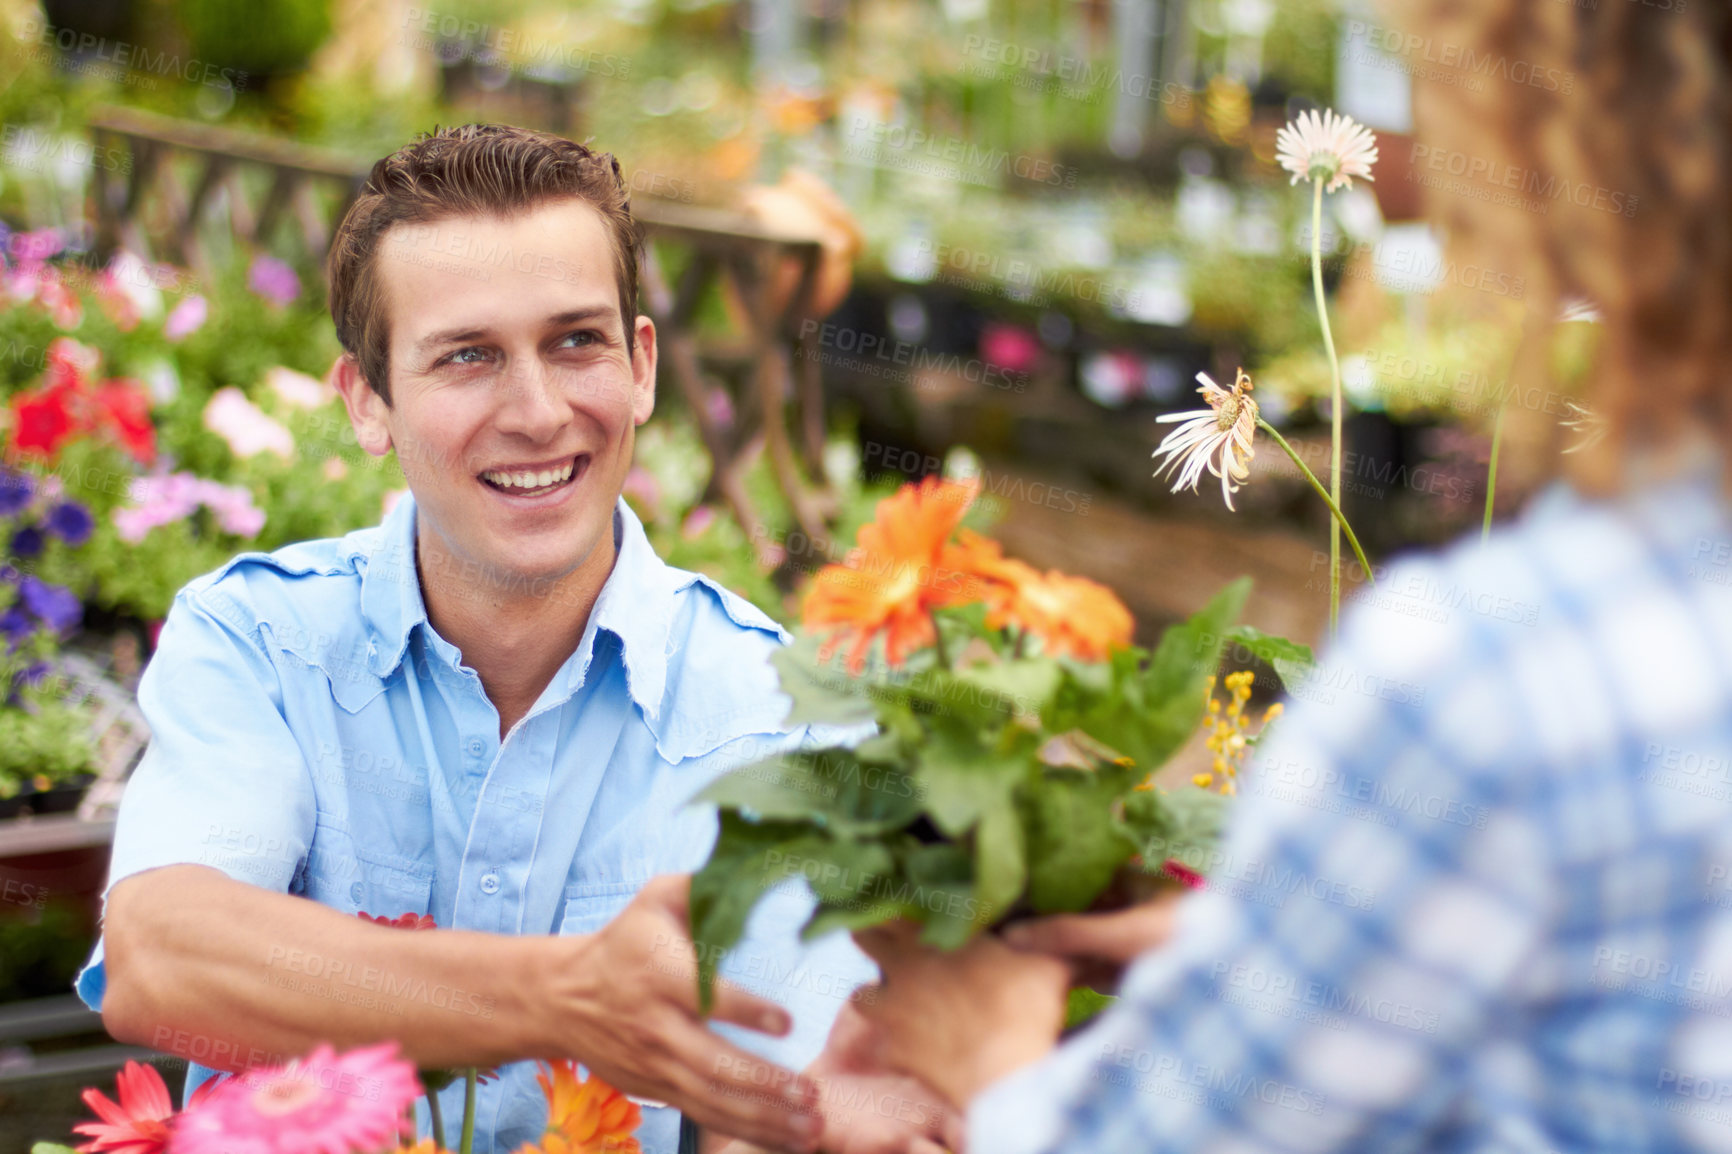 Buy stock photo A happy couple choosing flowers in a nursary